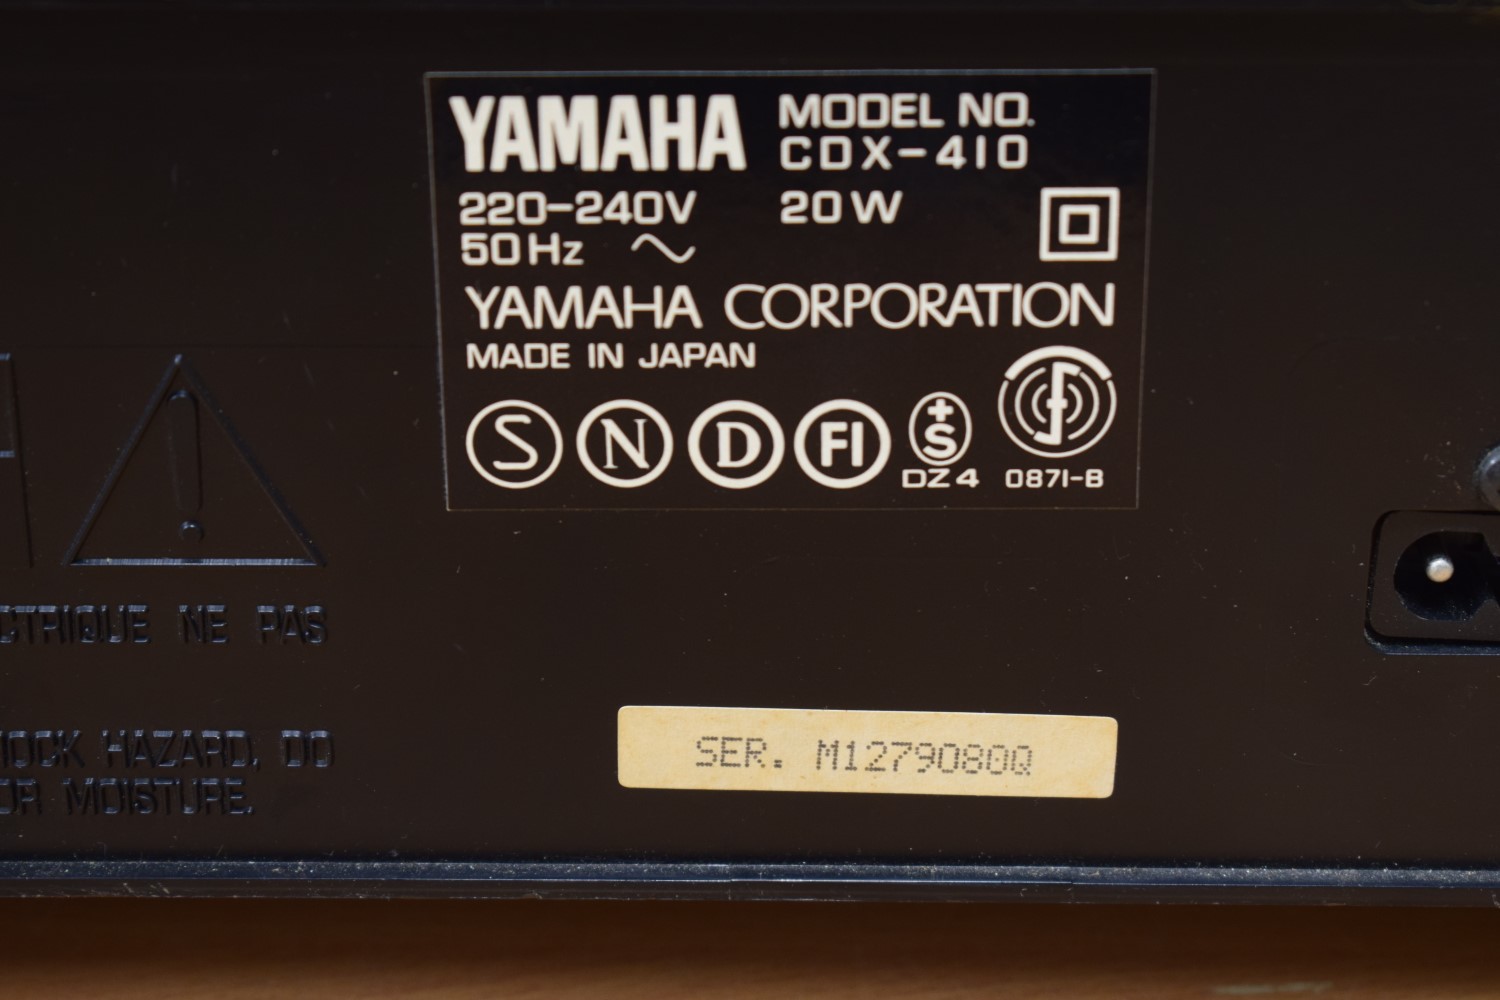 Yamaha CDX-410 CD-Player